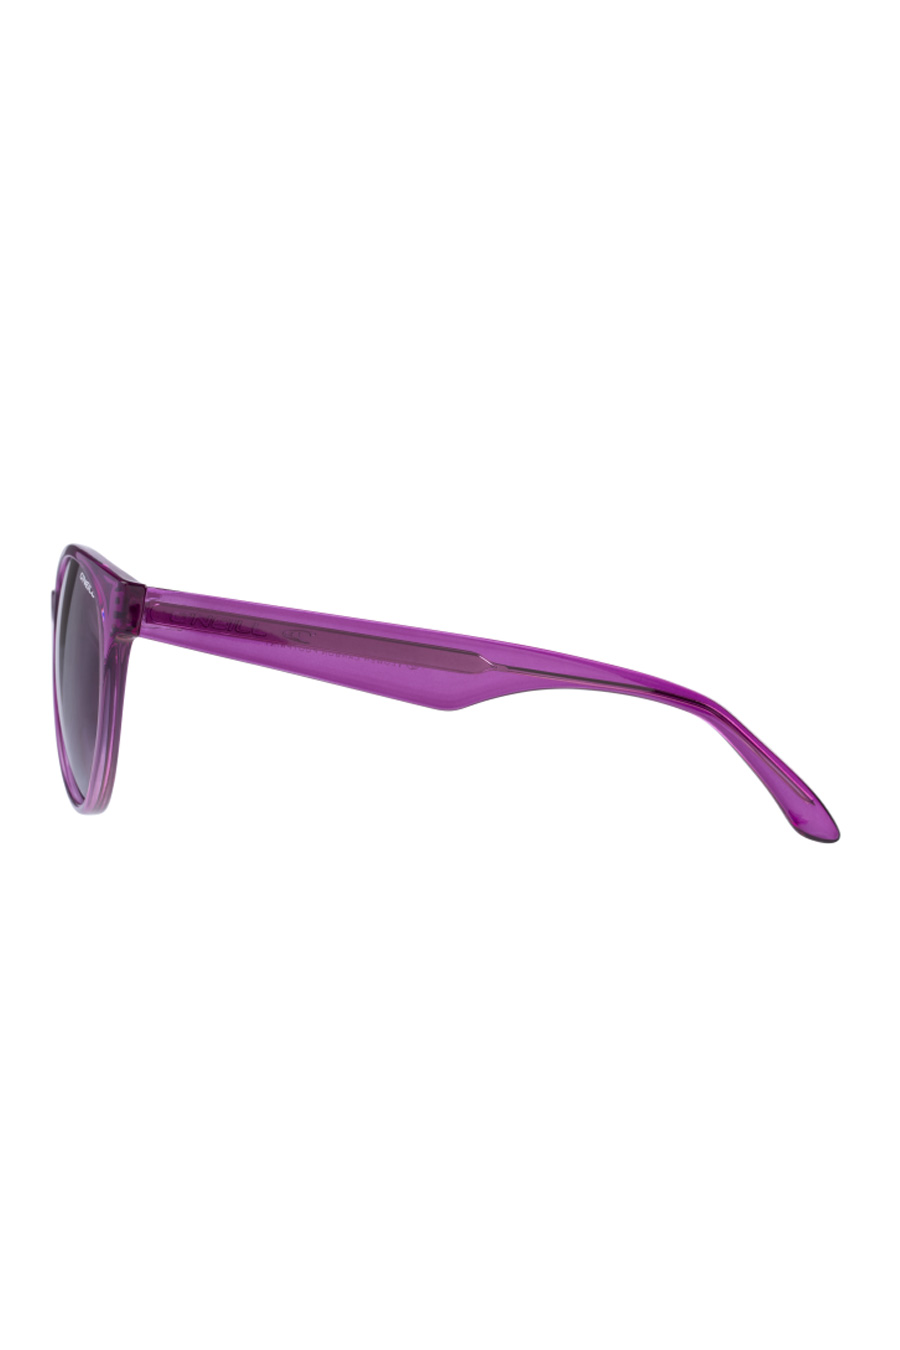 Солнечные очки ONEILL ONS-9009-20-172P